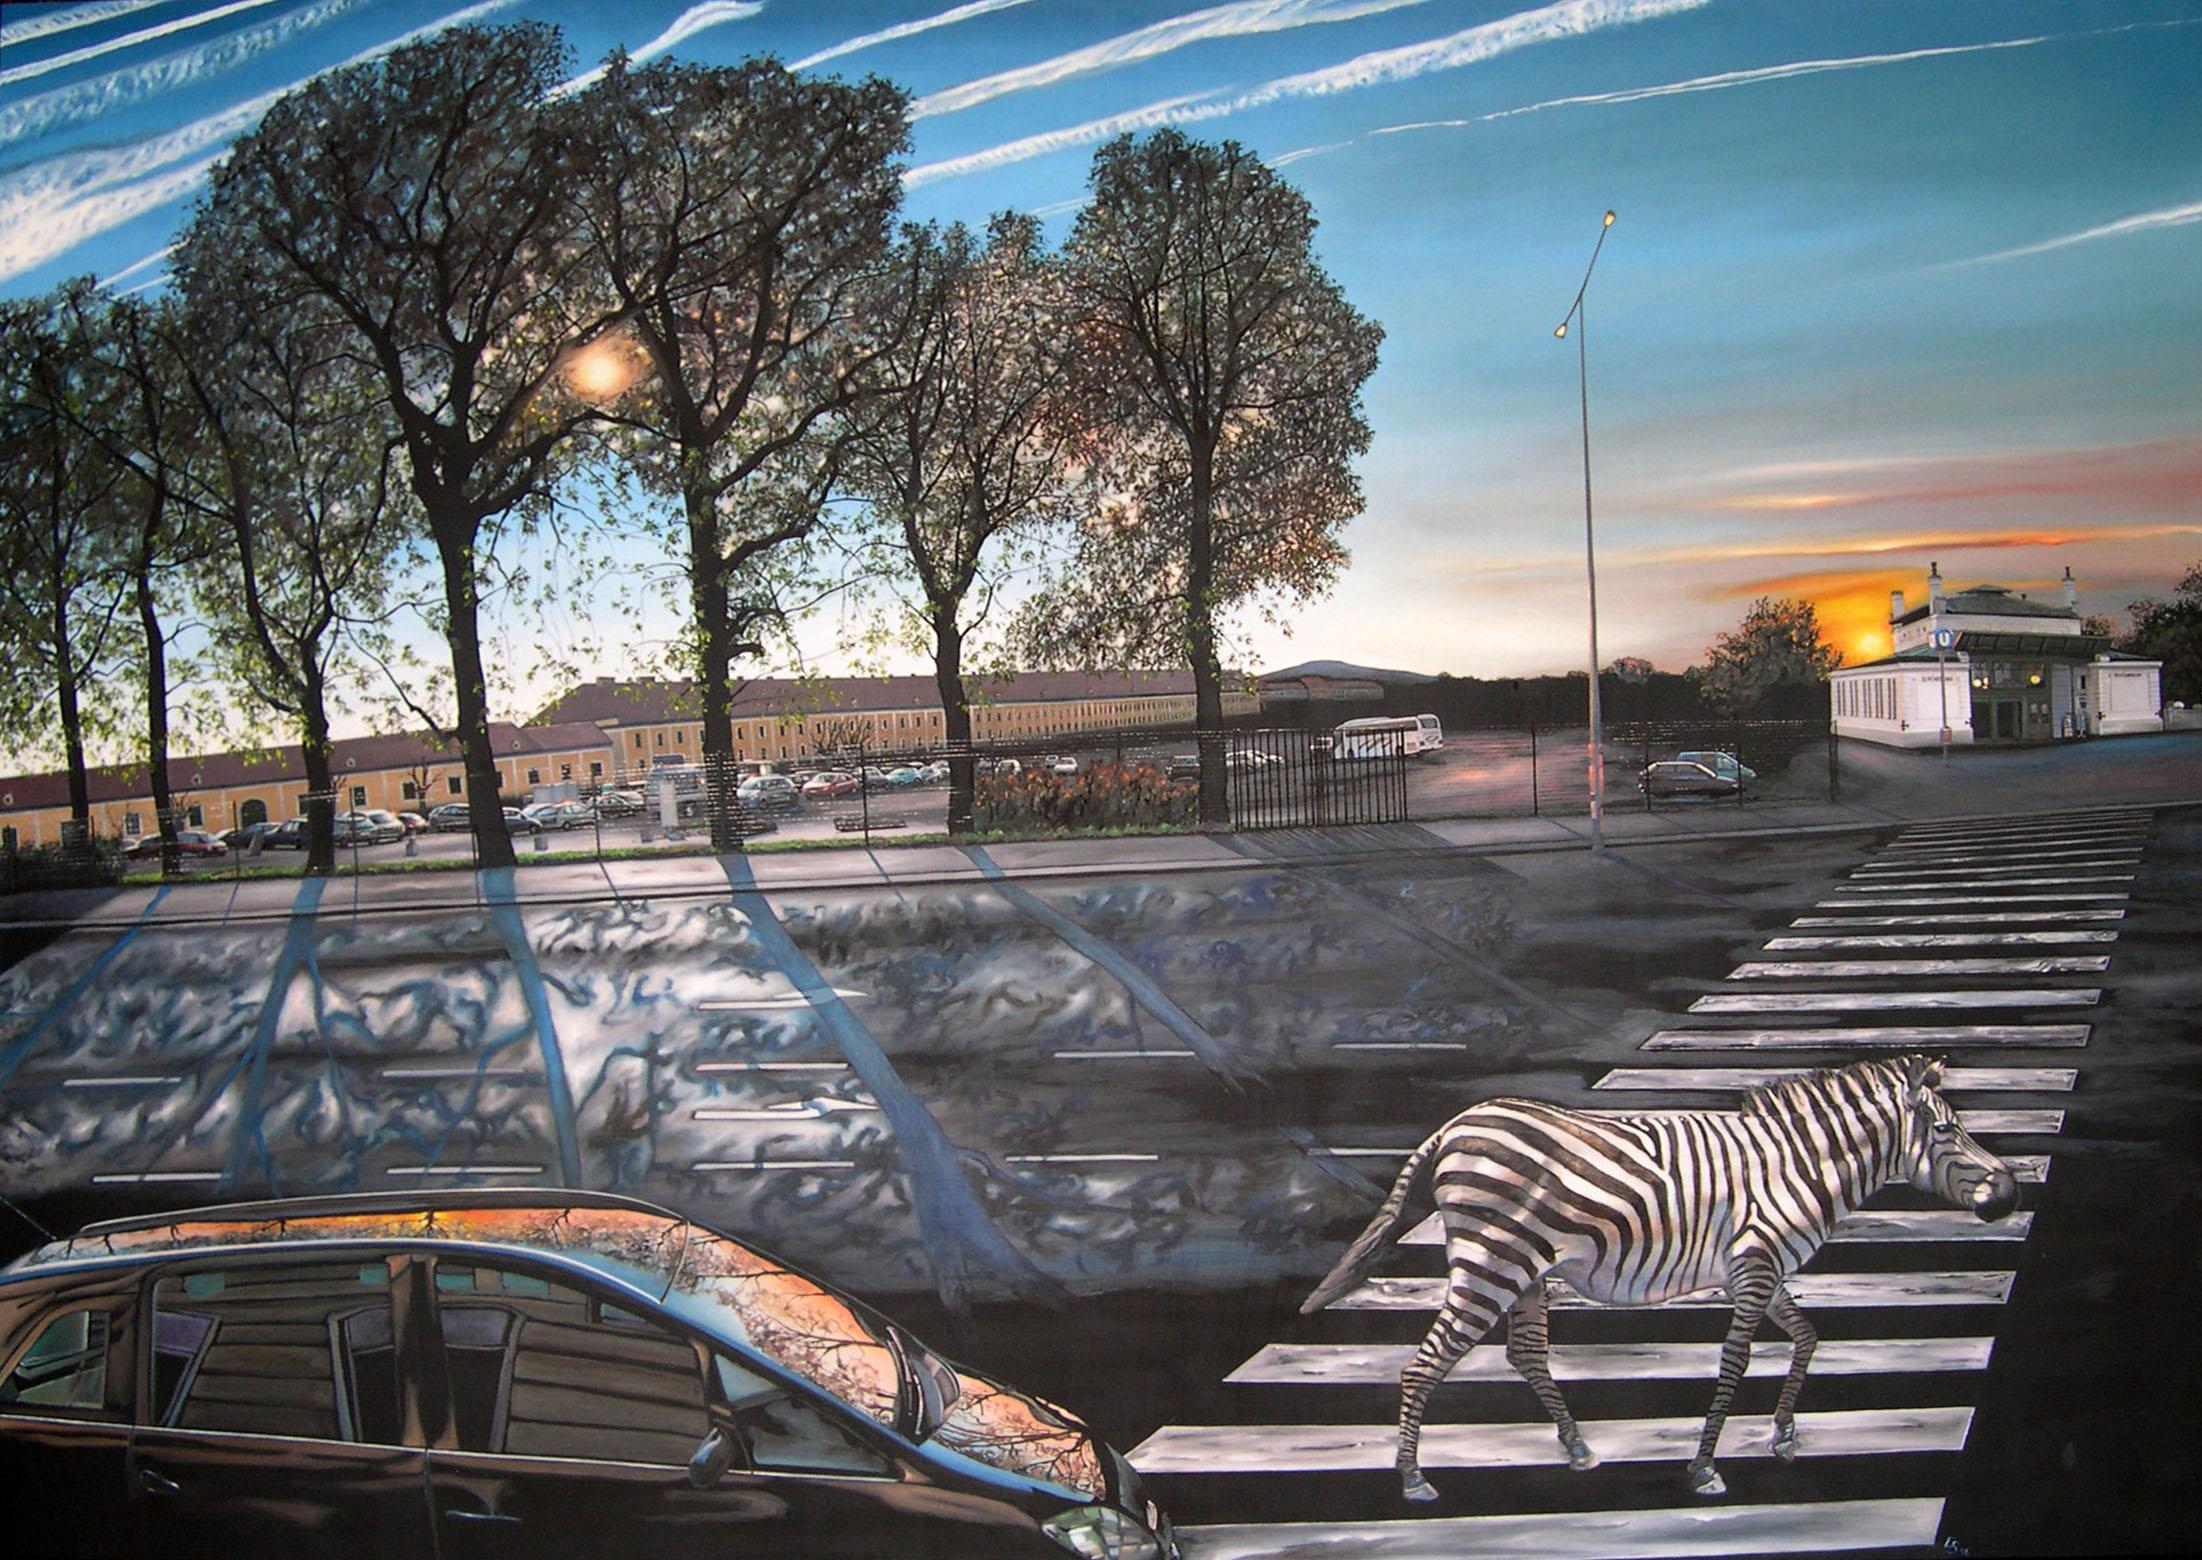 Elke Schönberger Animal Painting - Zebra Crossing - Urban Landscape, Painting, Oil/Canvas, Photorealism, 